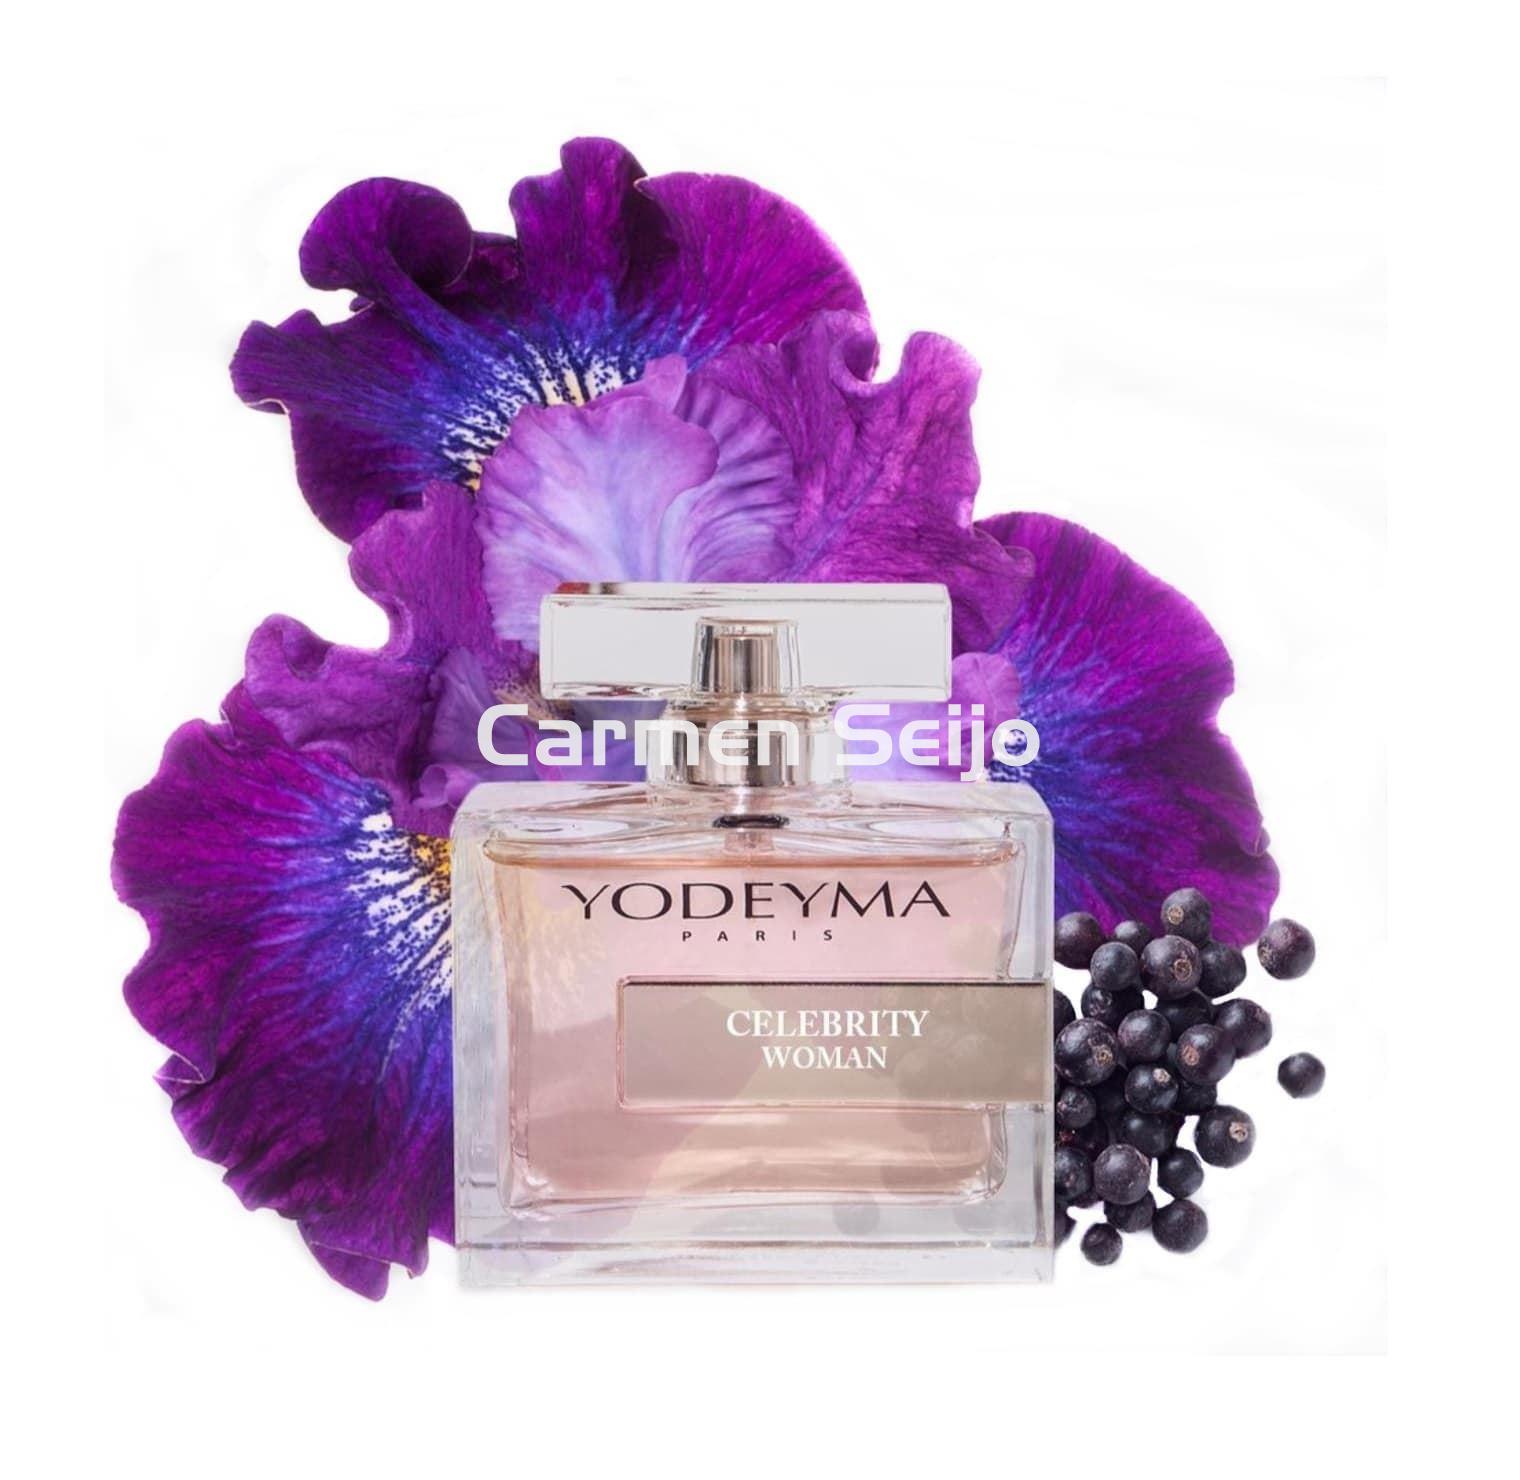 Yodeyma Mujer Agua de Perfume CELEBRITY WOMAN 100 ml. - Imagen 1